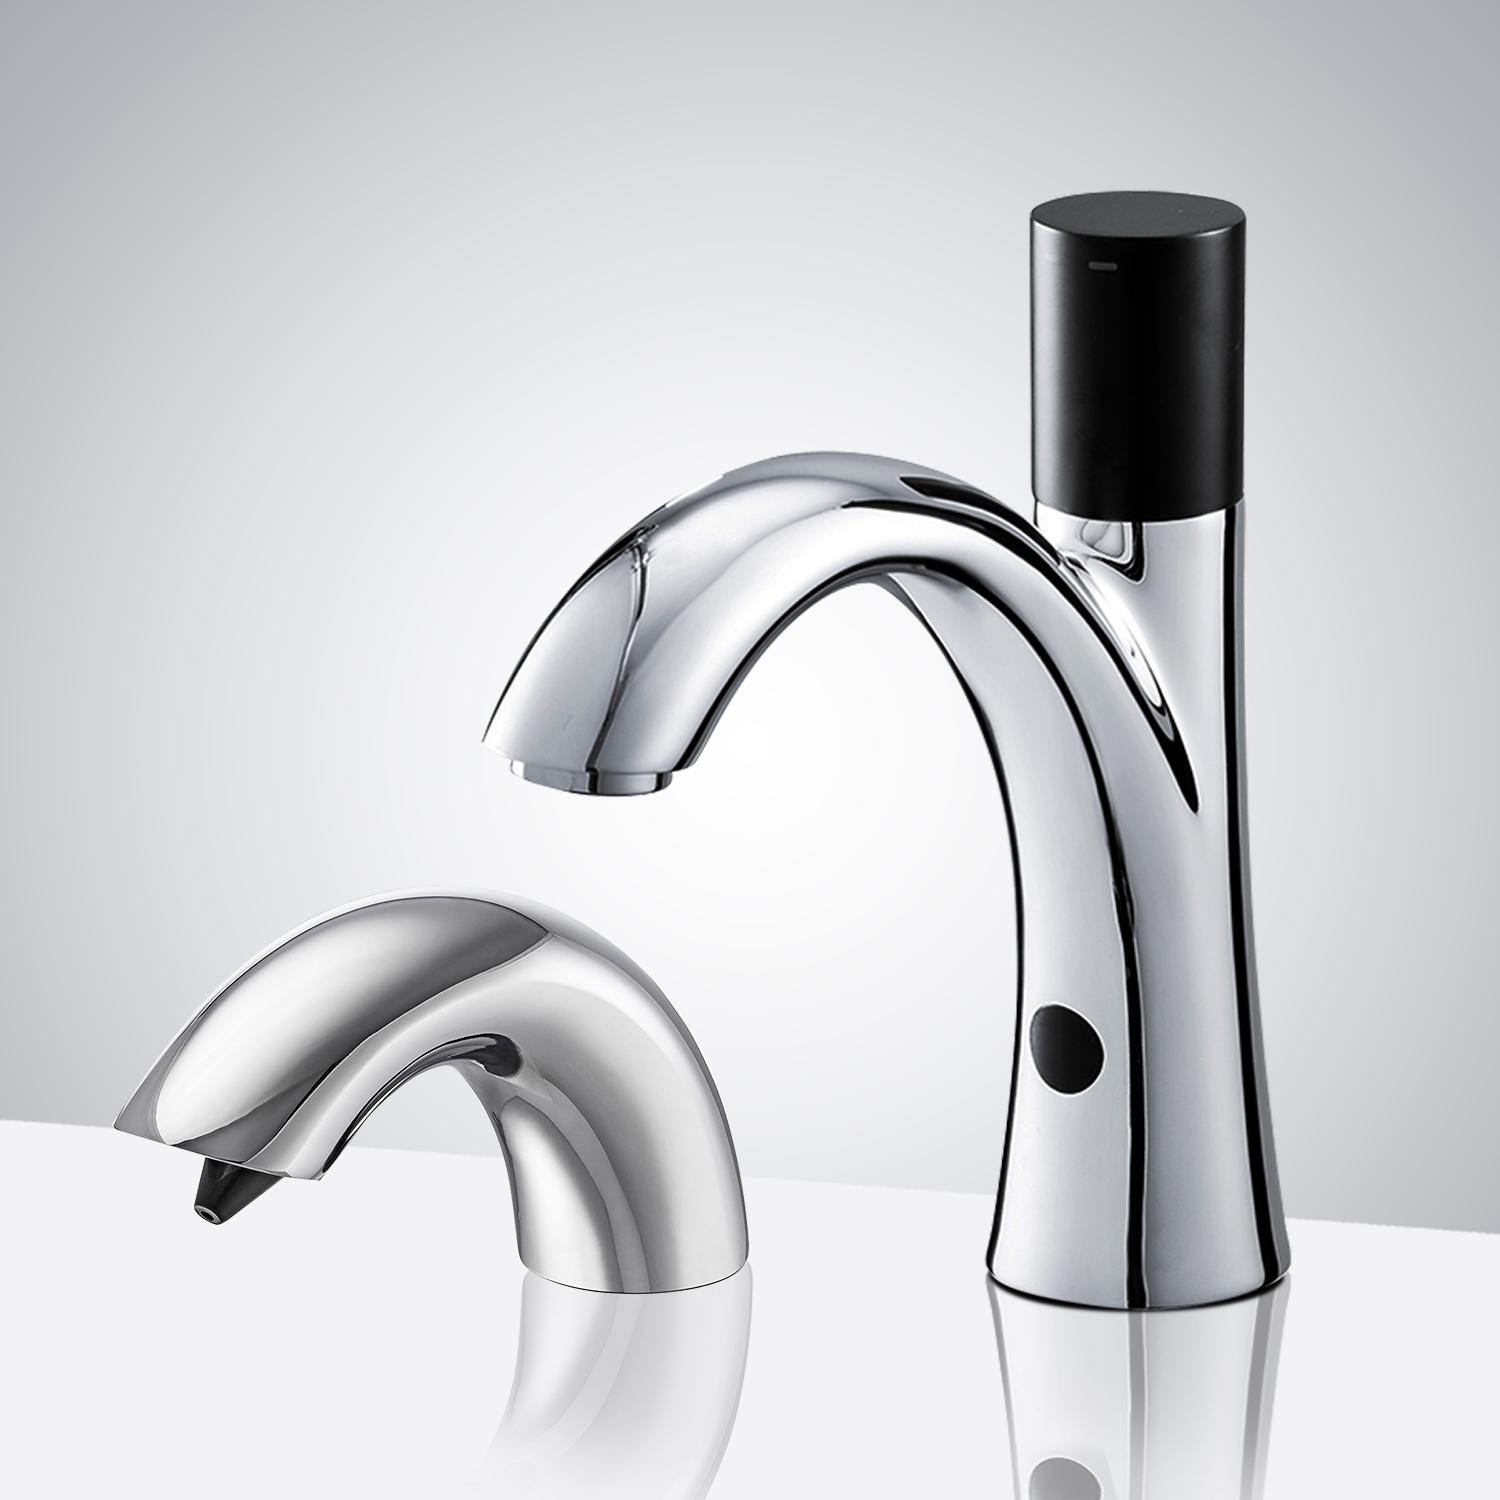 DUPLICATE Fontana St. Gallen Motion Sensor Faucet & Automatic Soap Dispenser for Restrooms